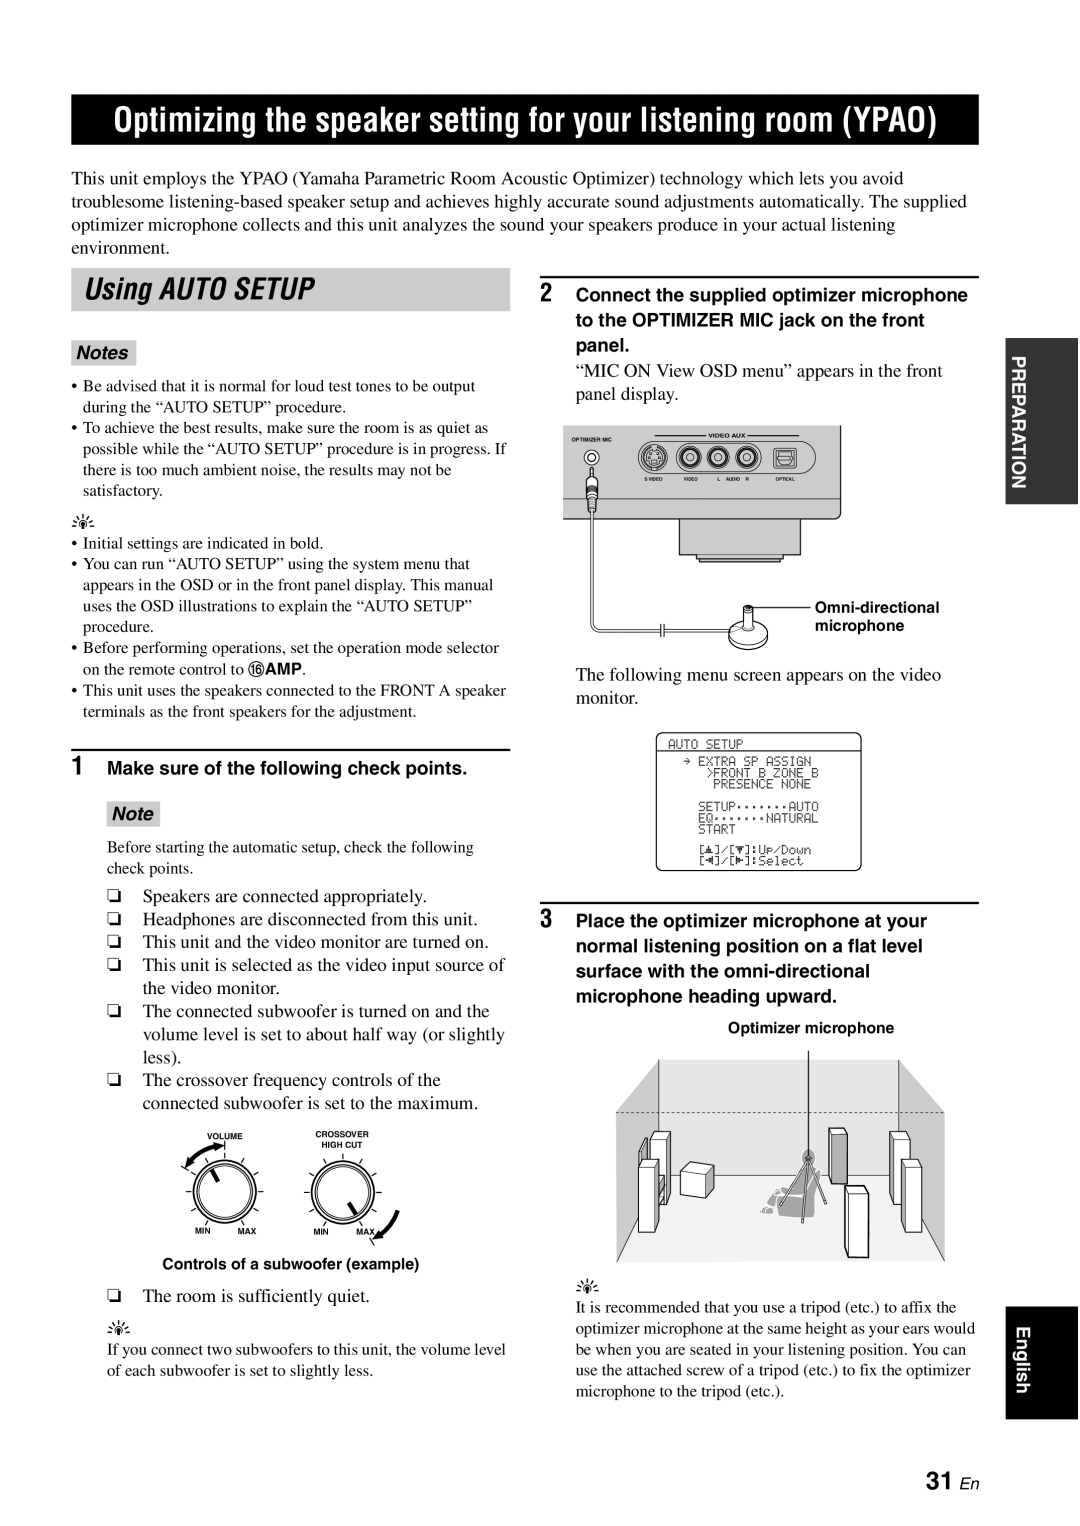 Yamaha DSP-AX863SE owner manual Using AUTO SETUP, 31 En, 1Make sure of the following check points, Notes 